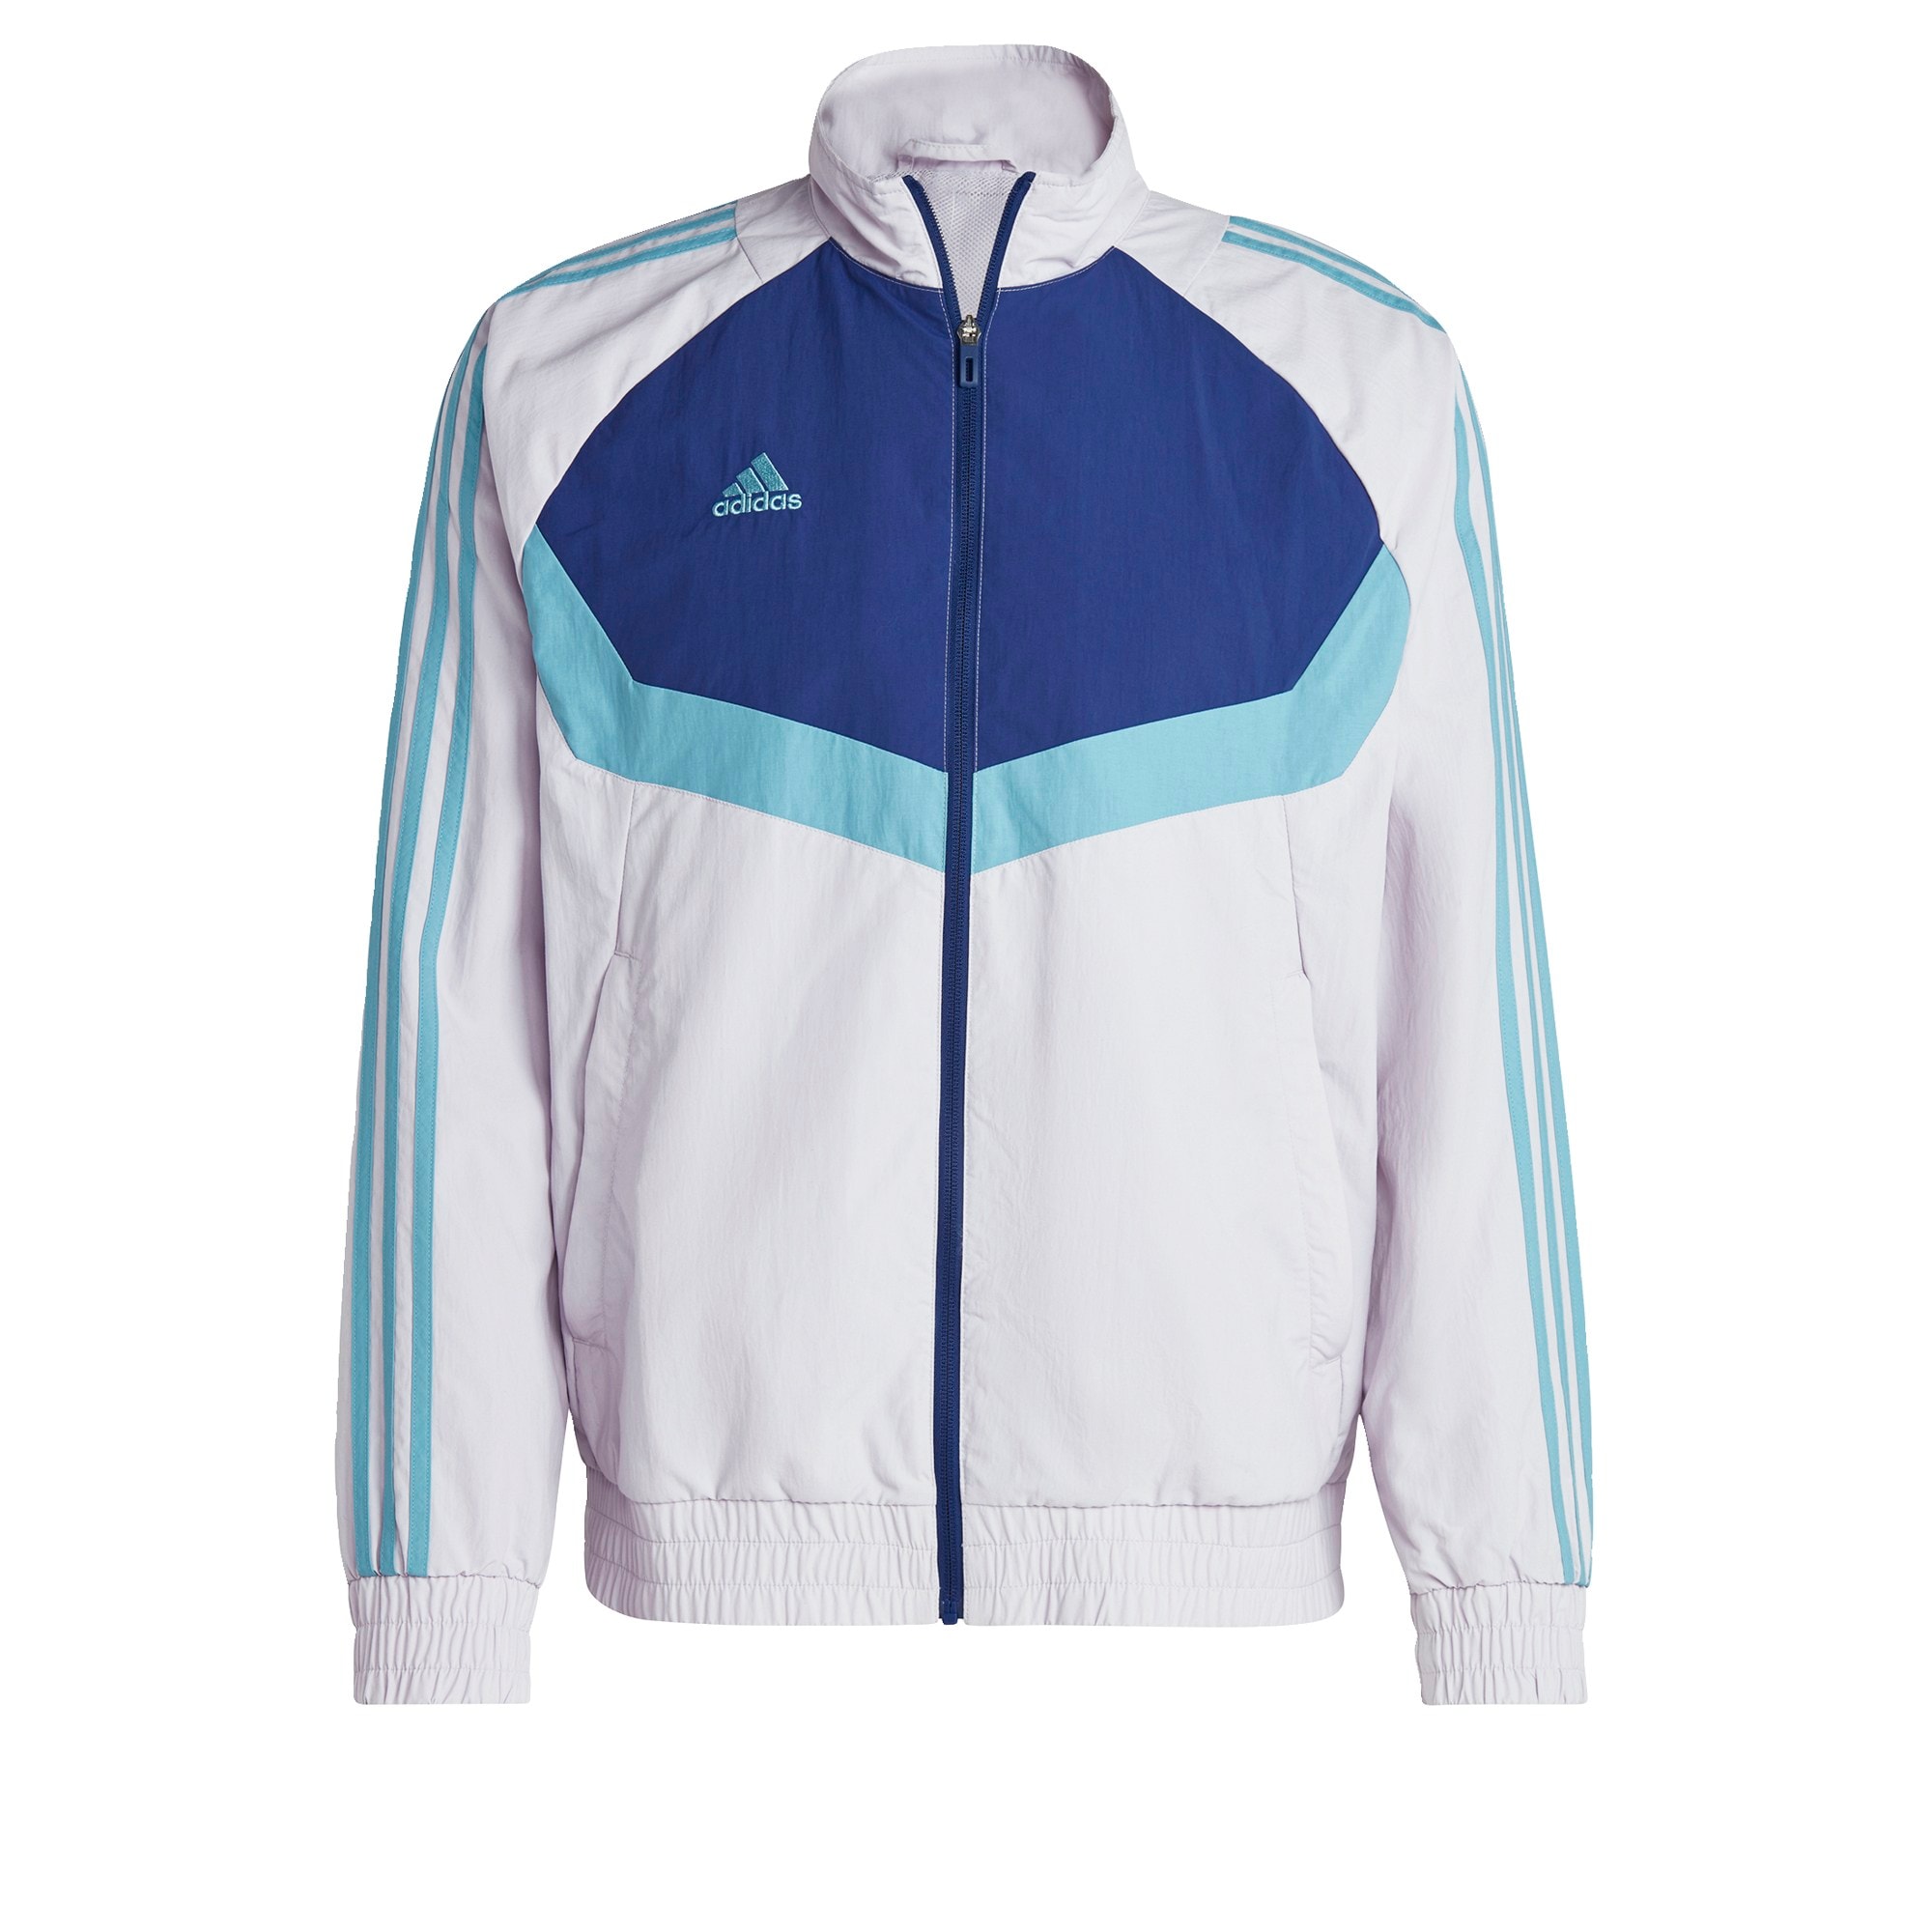 ADIDAS SPORTSWEAR Športna jakna 'Tiro'  nebeško modra / temno modra / bela